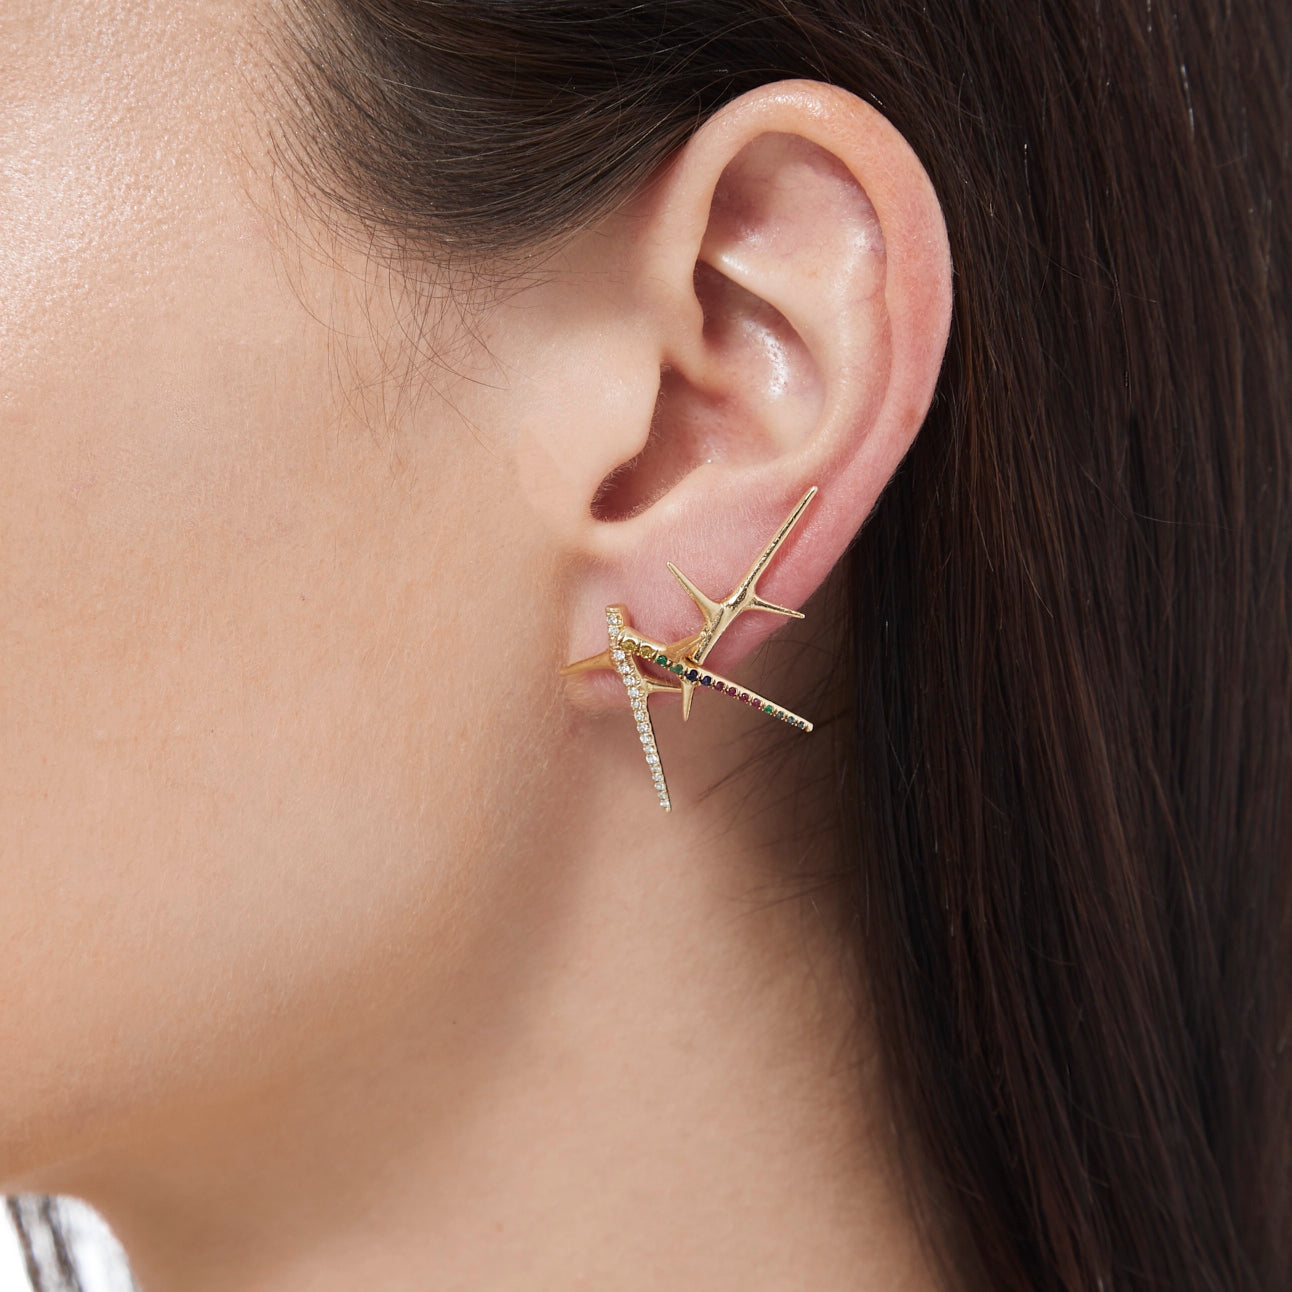 Thorn Studs Stud Earrings Elisabeth Bell Jewelry   